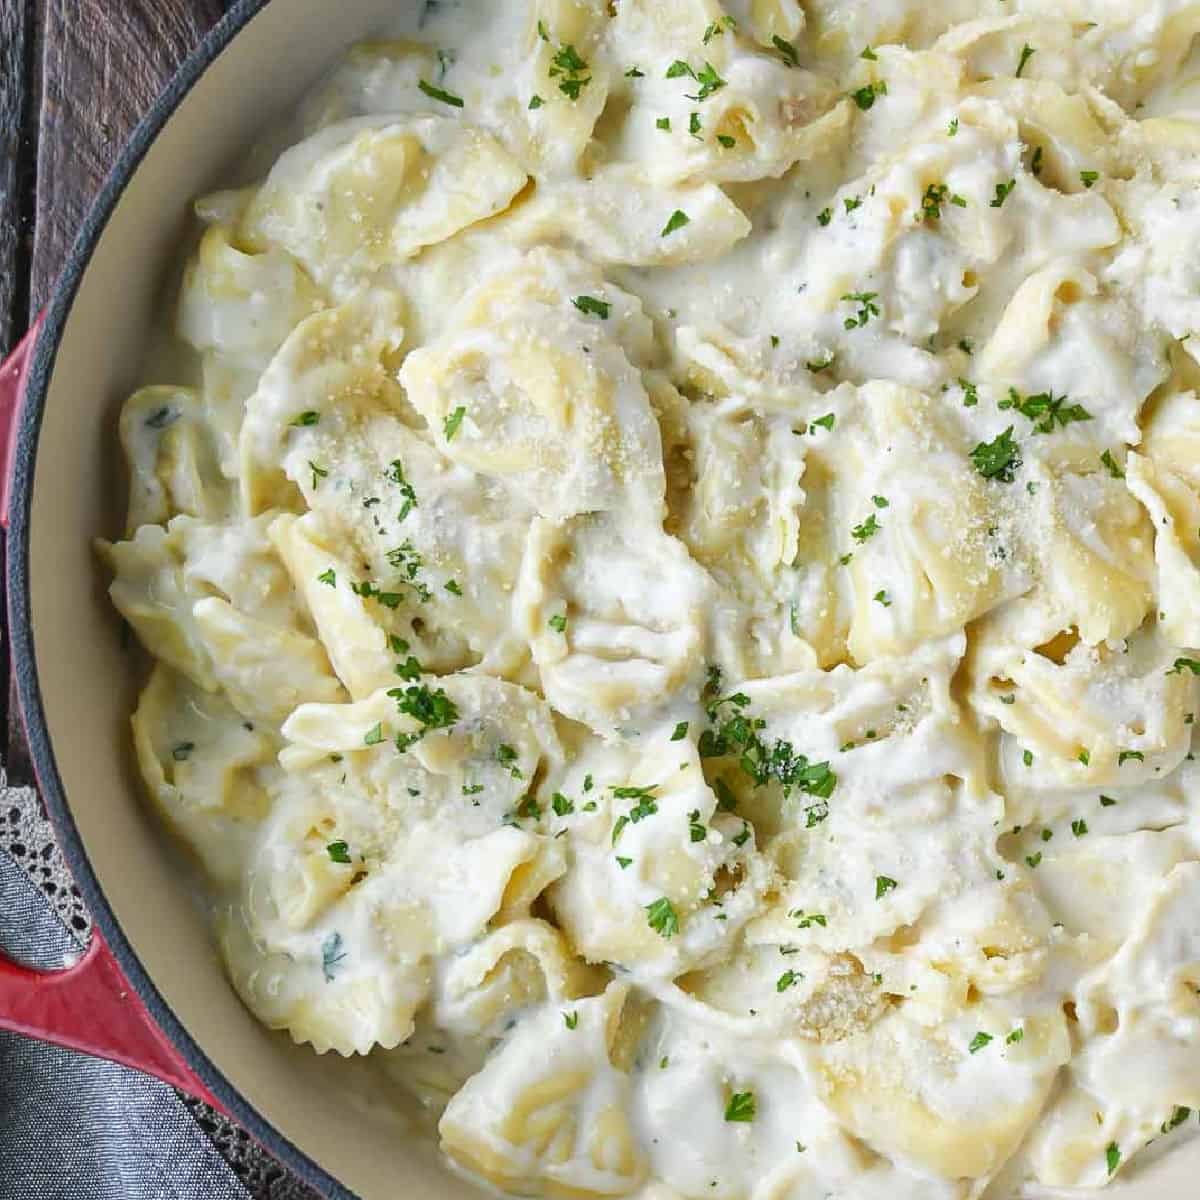 https://butteryourbiscuit.com/wp-content/uploads/2018/01/garlic-alfredo-cheese-tortellini-5-1.jpg